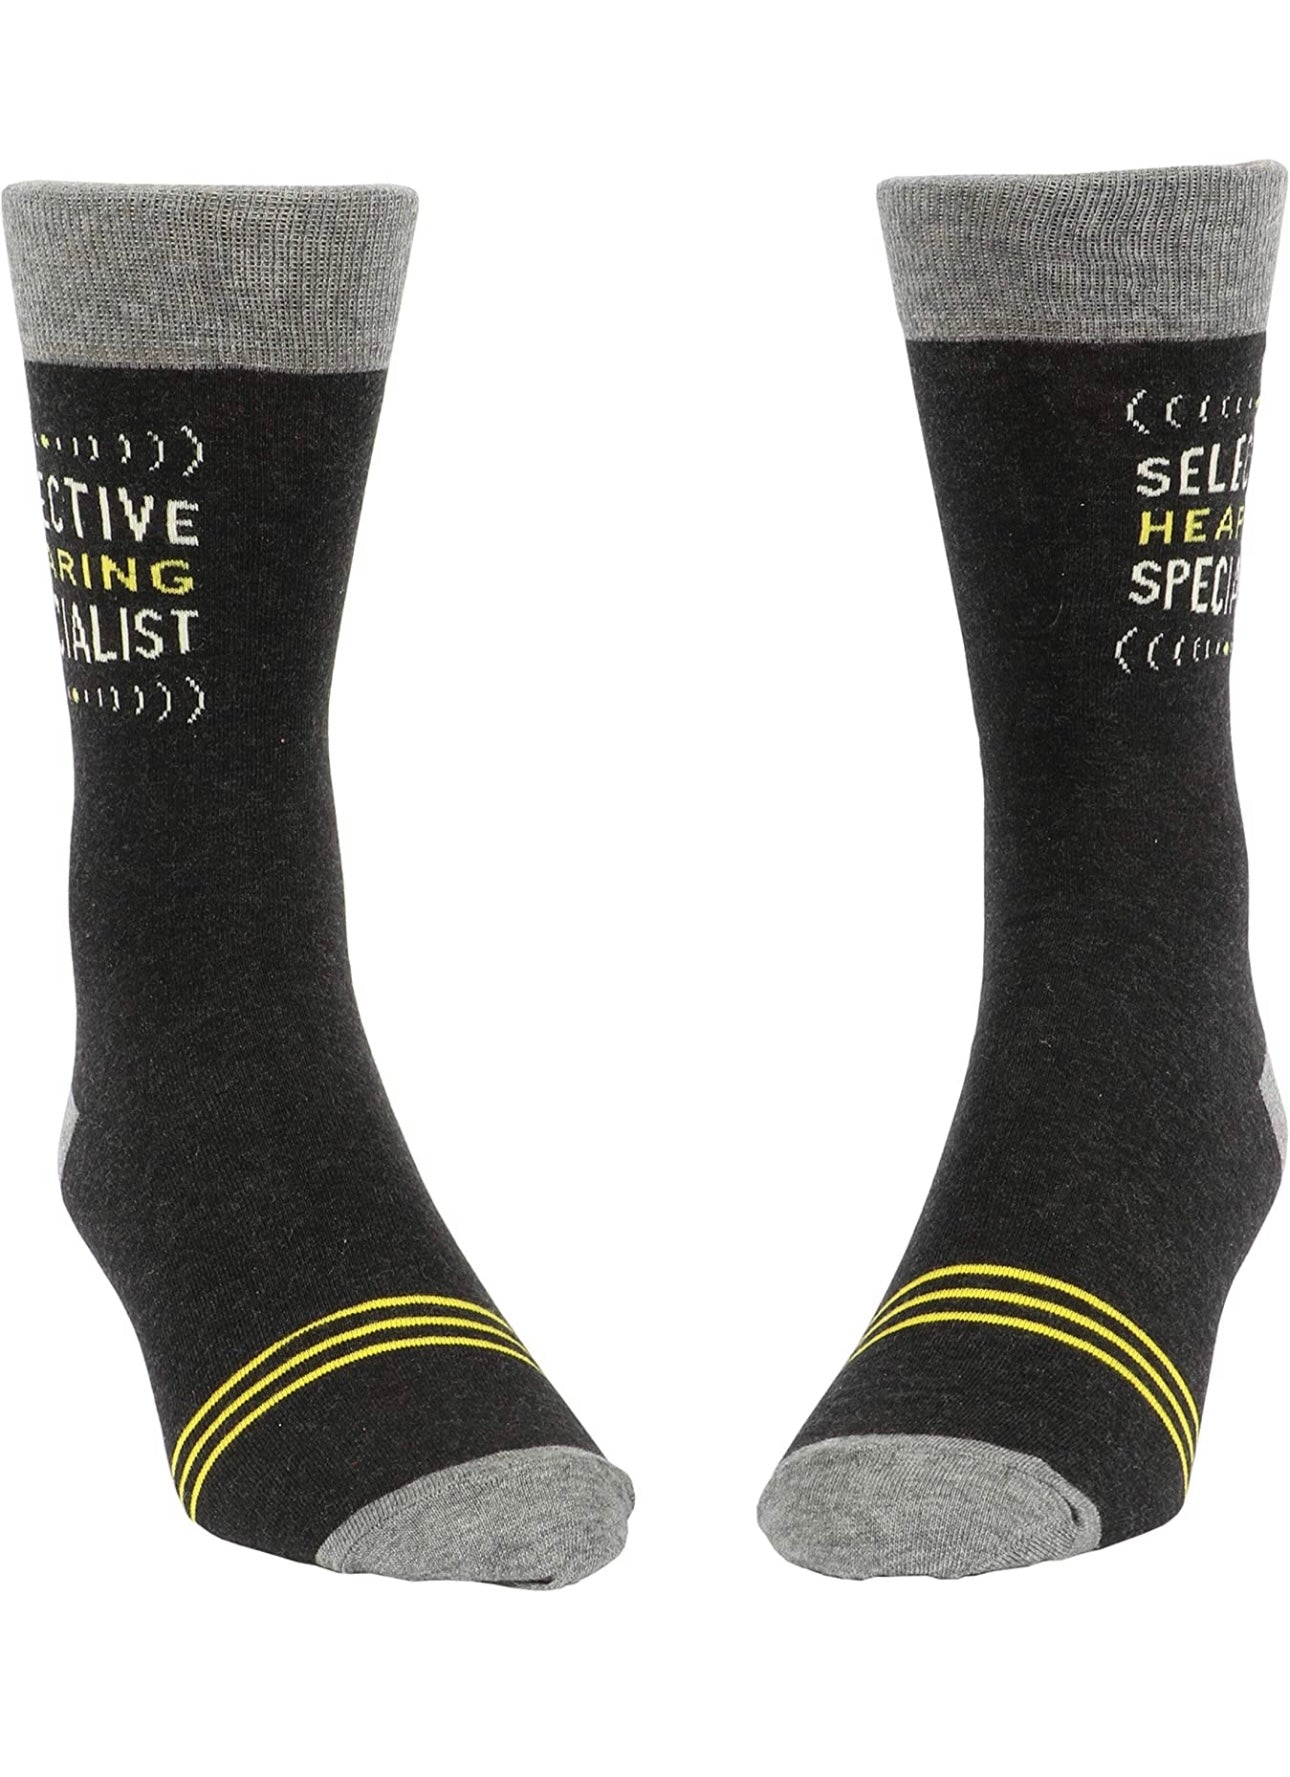 Selective Hearing Specialist Men's Crew Novelty Socks